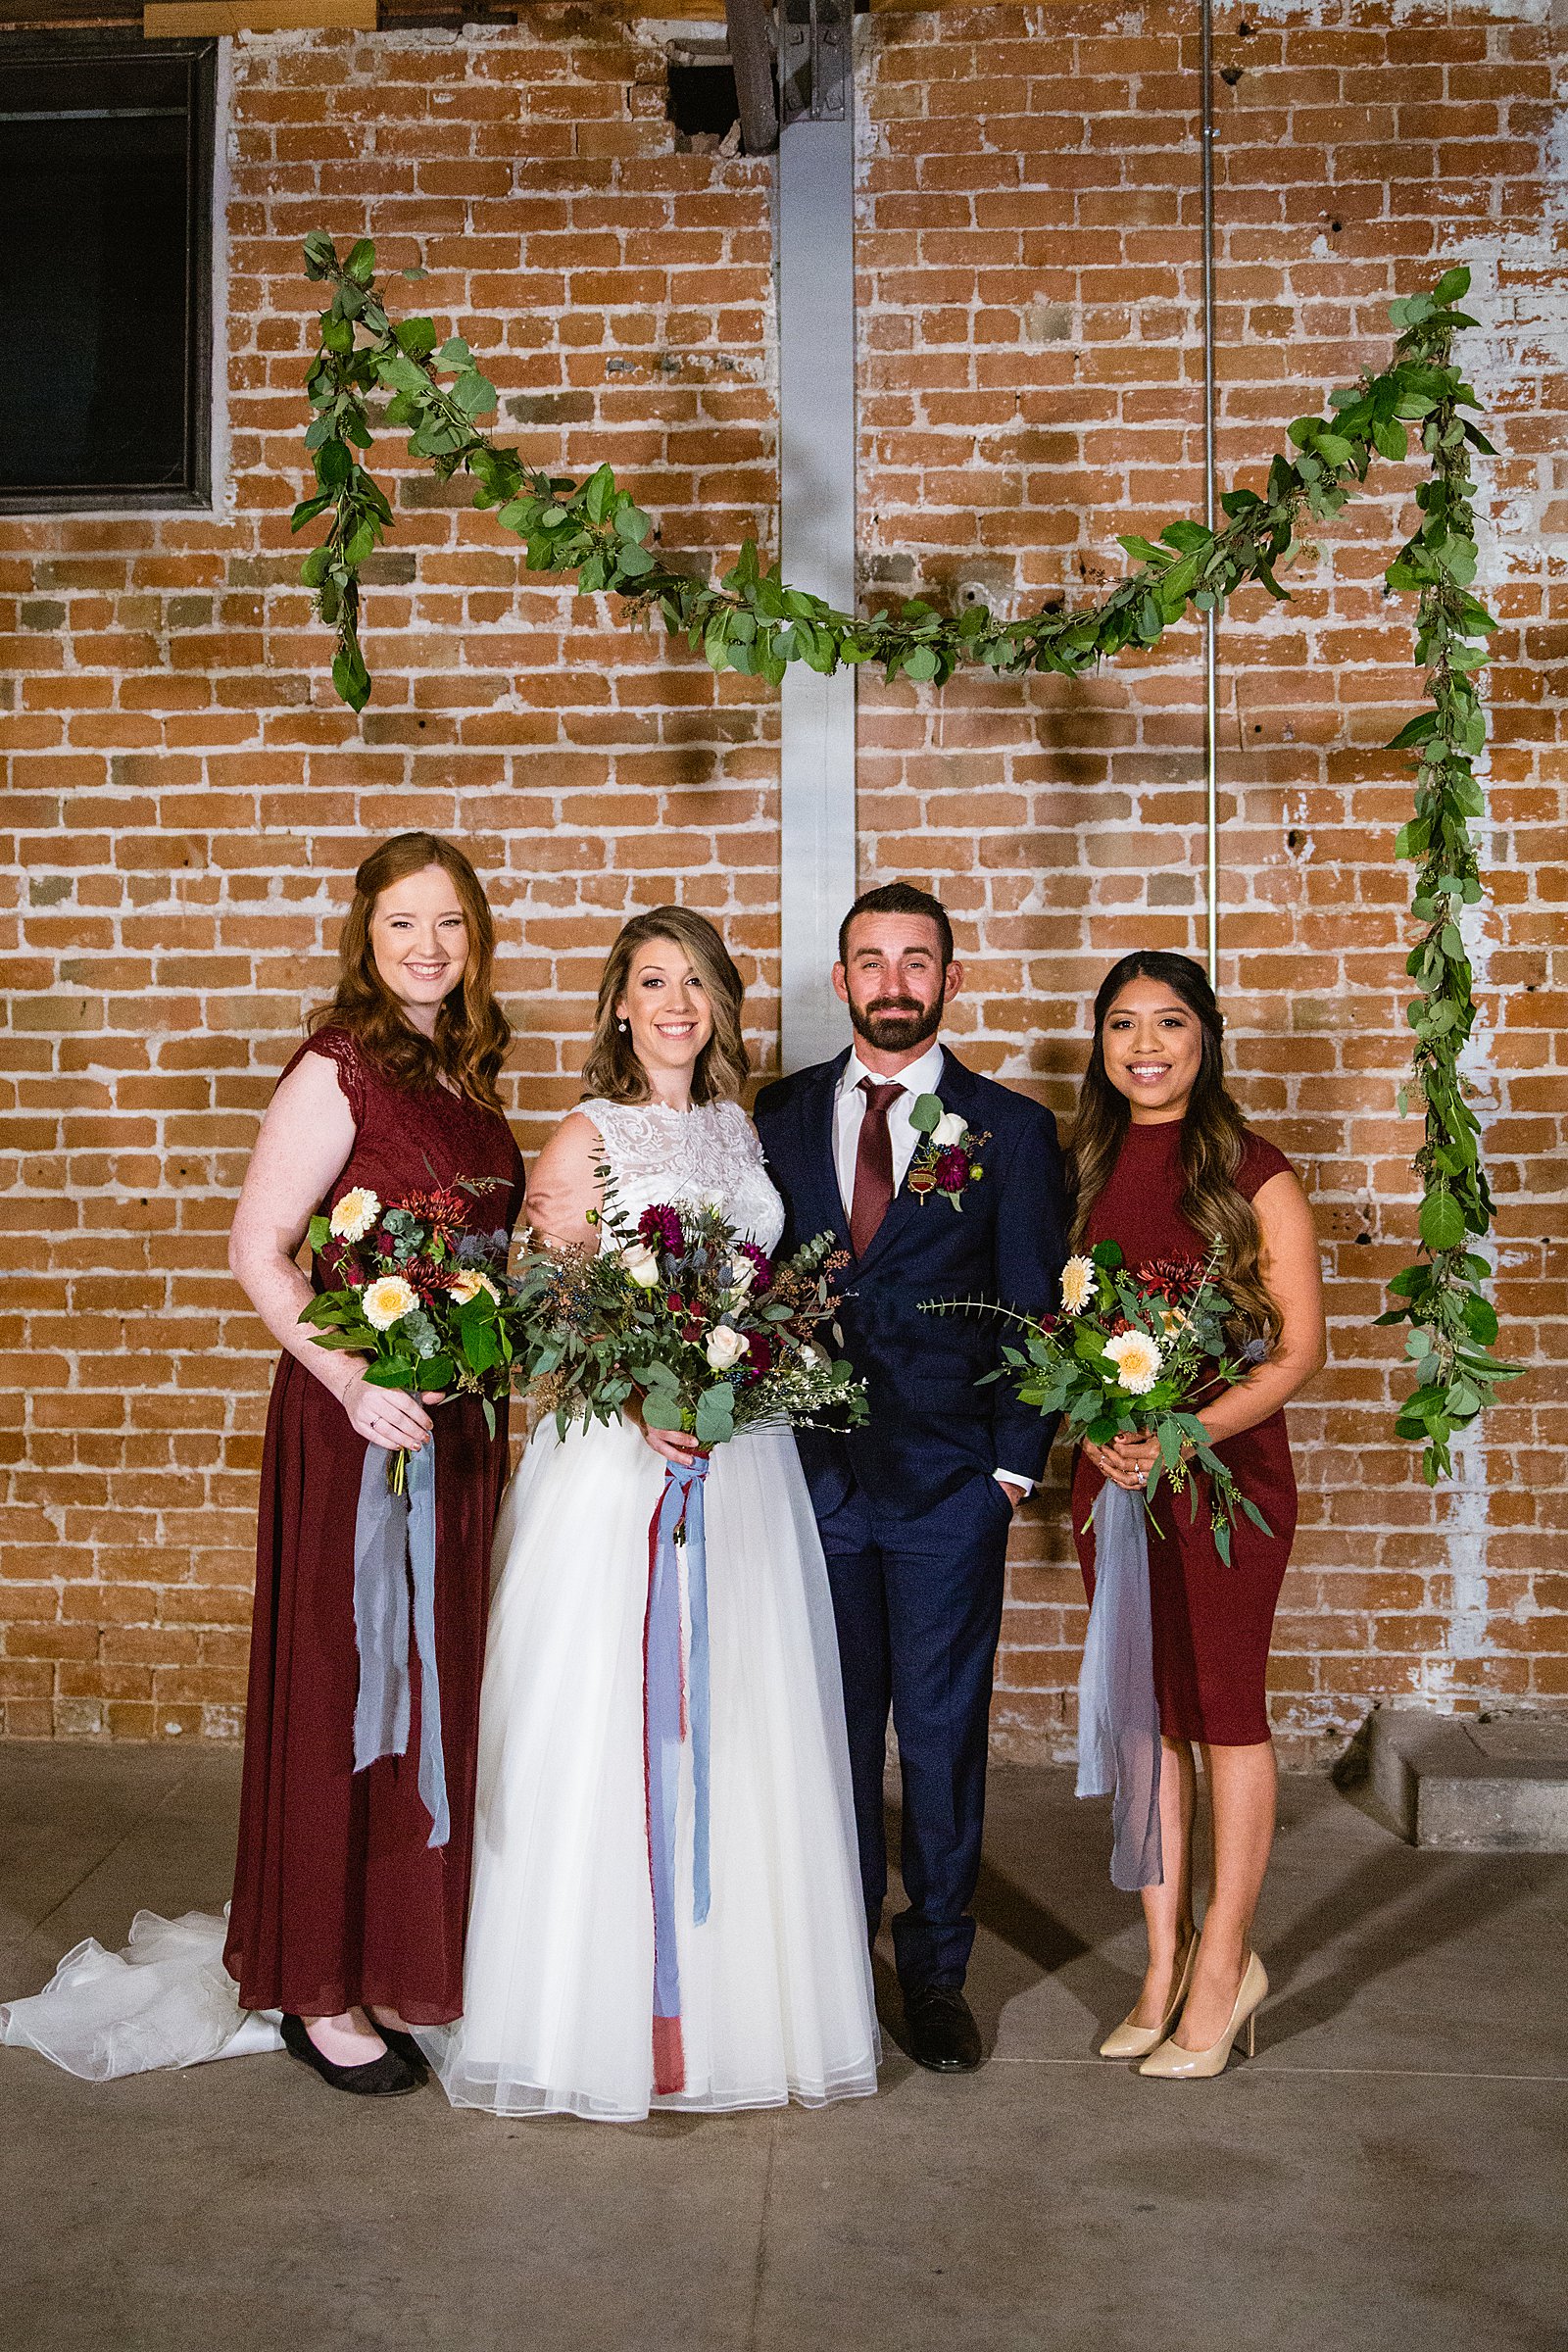 Bridal party together at a Sunkist Warehouse wedding by Arizona wedding photographer PMA Photography.